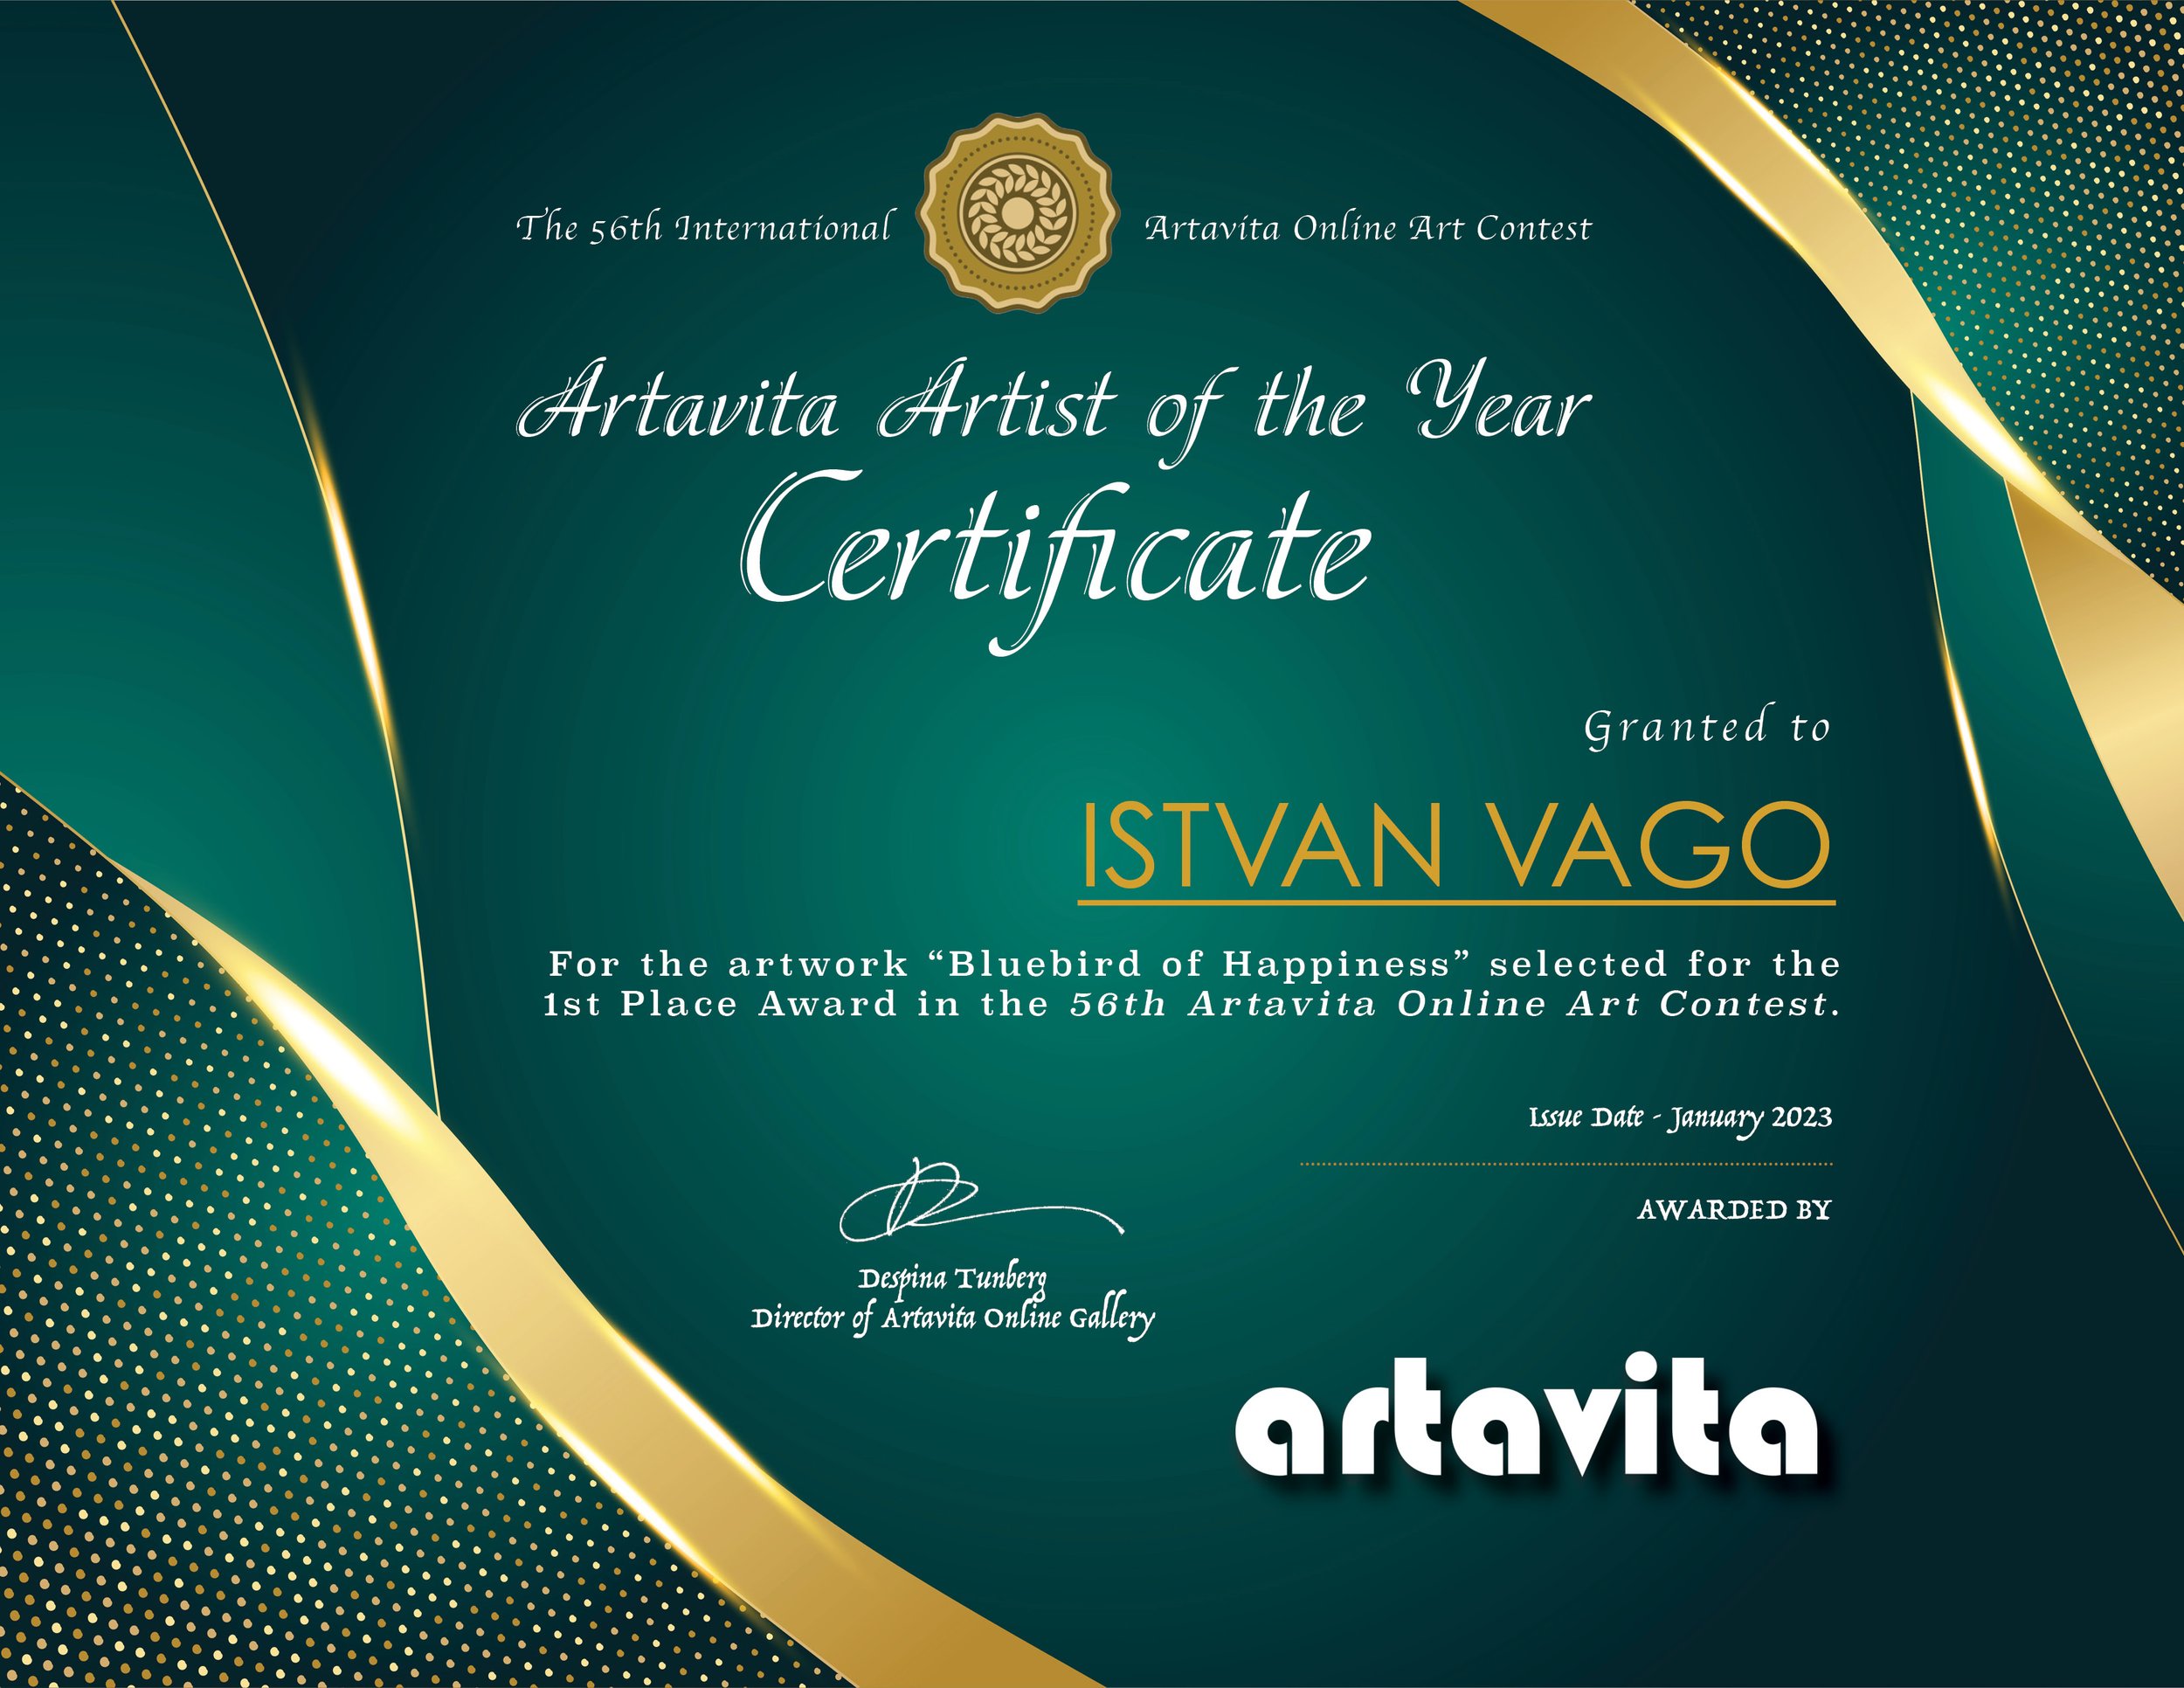 Artavita_Certificate_Contest56_1stPlaceAward-Istvan Vago.jpg